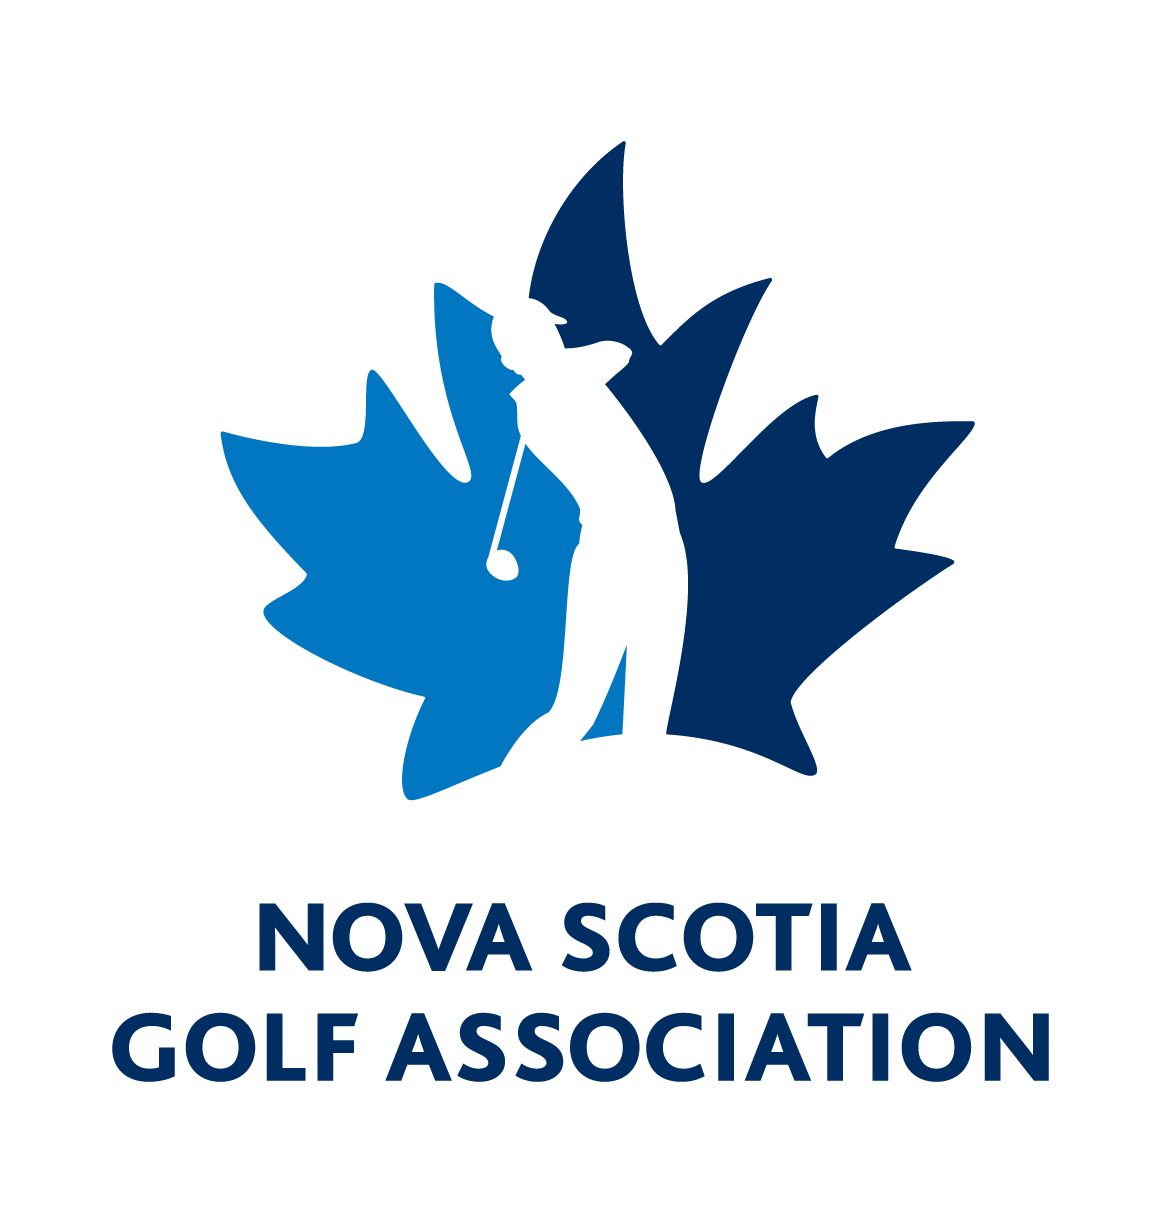 Nova Scotia Gold Association